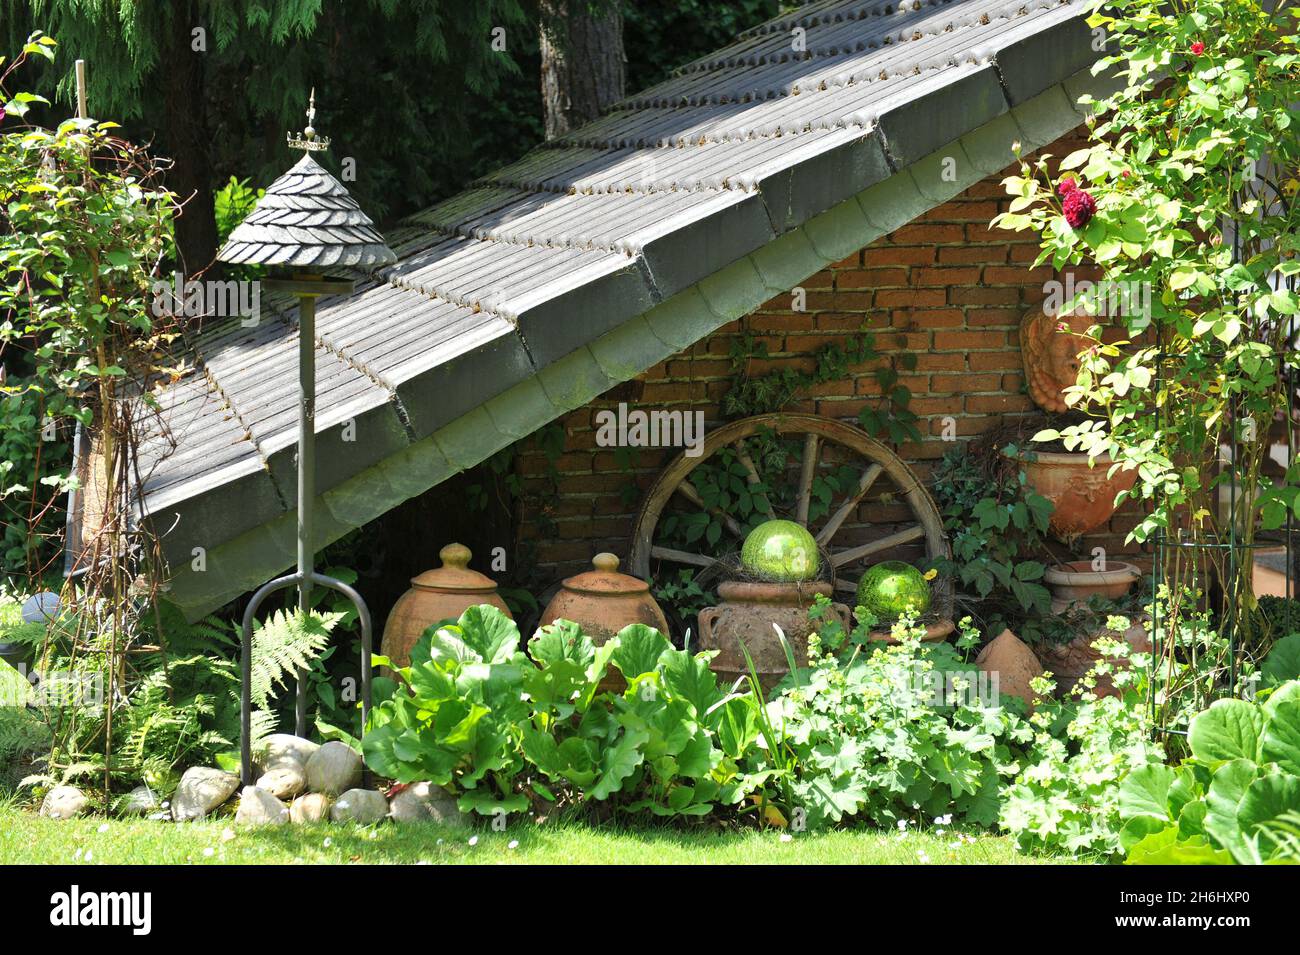 SOLINGEN, GERMANY - 15 JUNE 2013: Decoration of the German garden Ulbrich in June Stock Photo